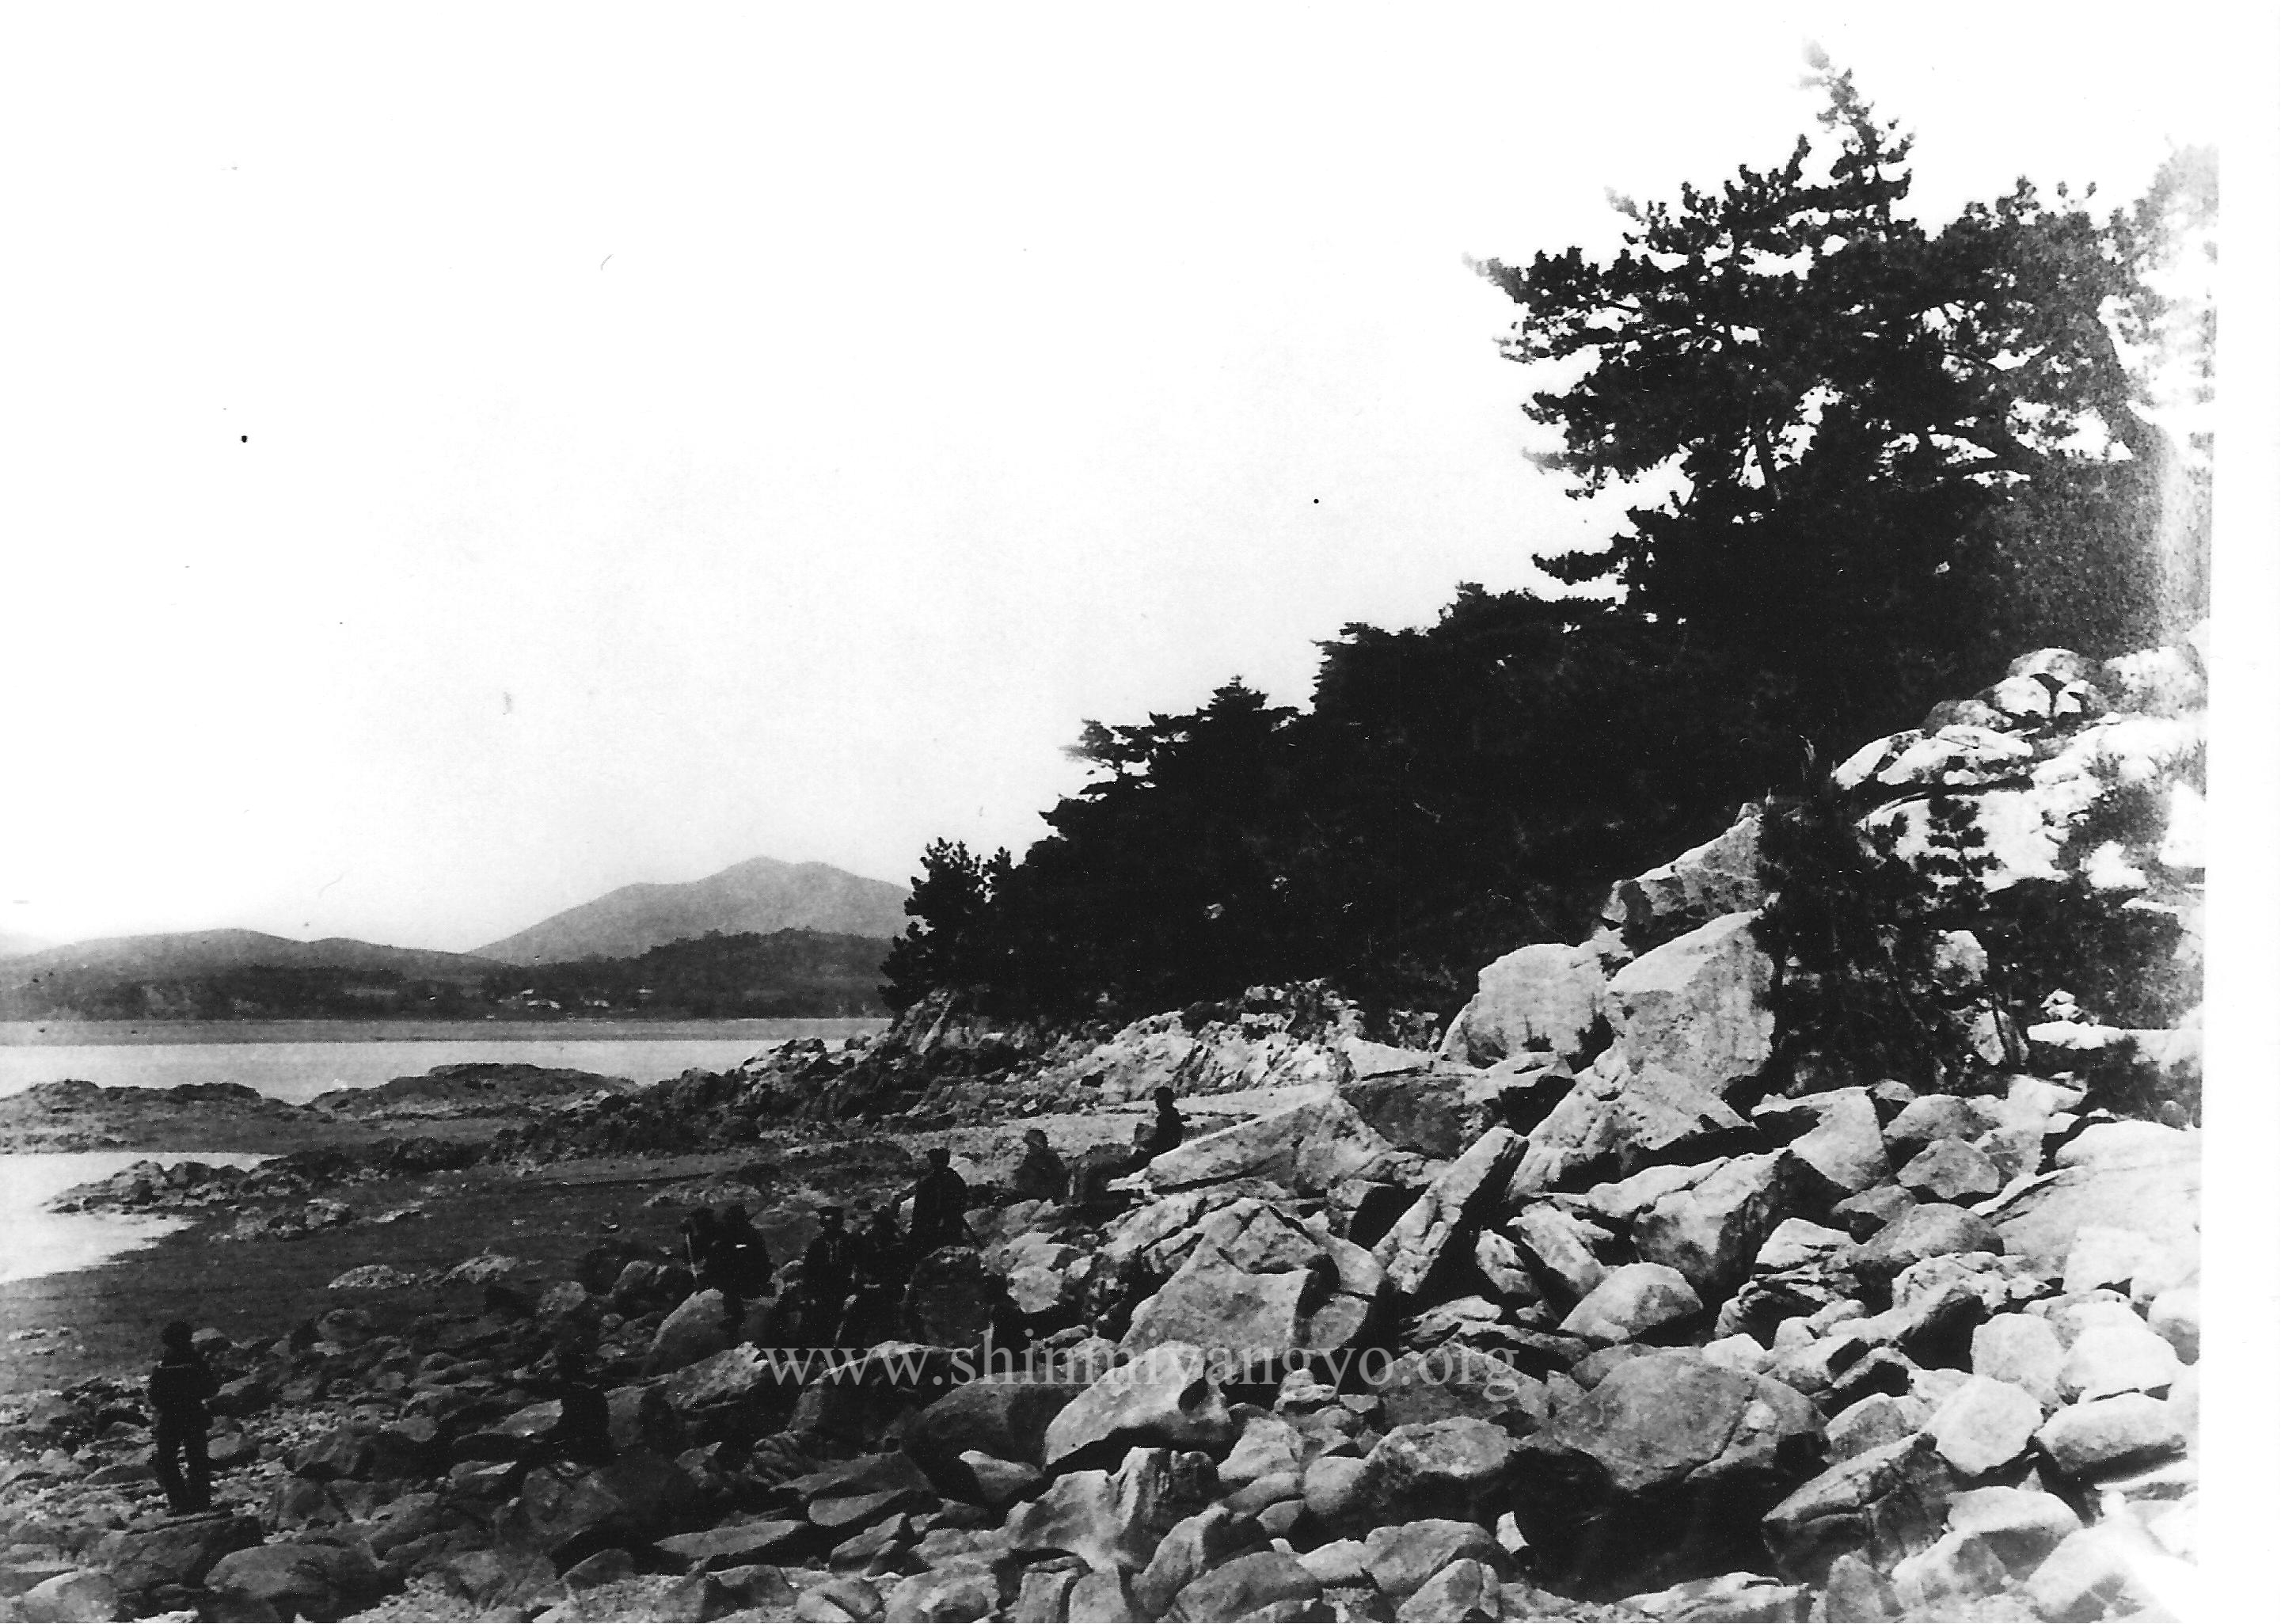 KWG05 (South side of Mulchi Island, looking west towards Yeongjong Island)